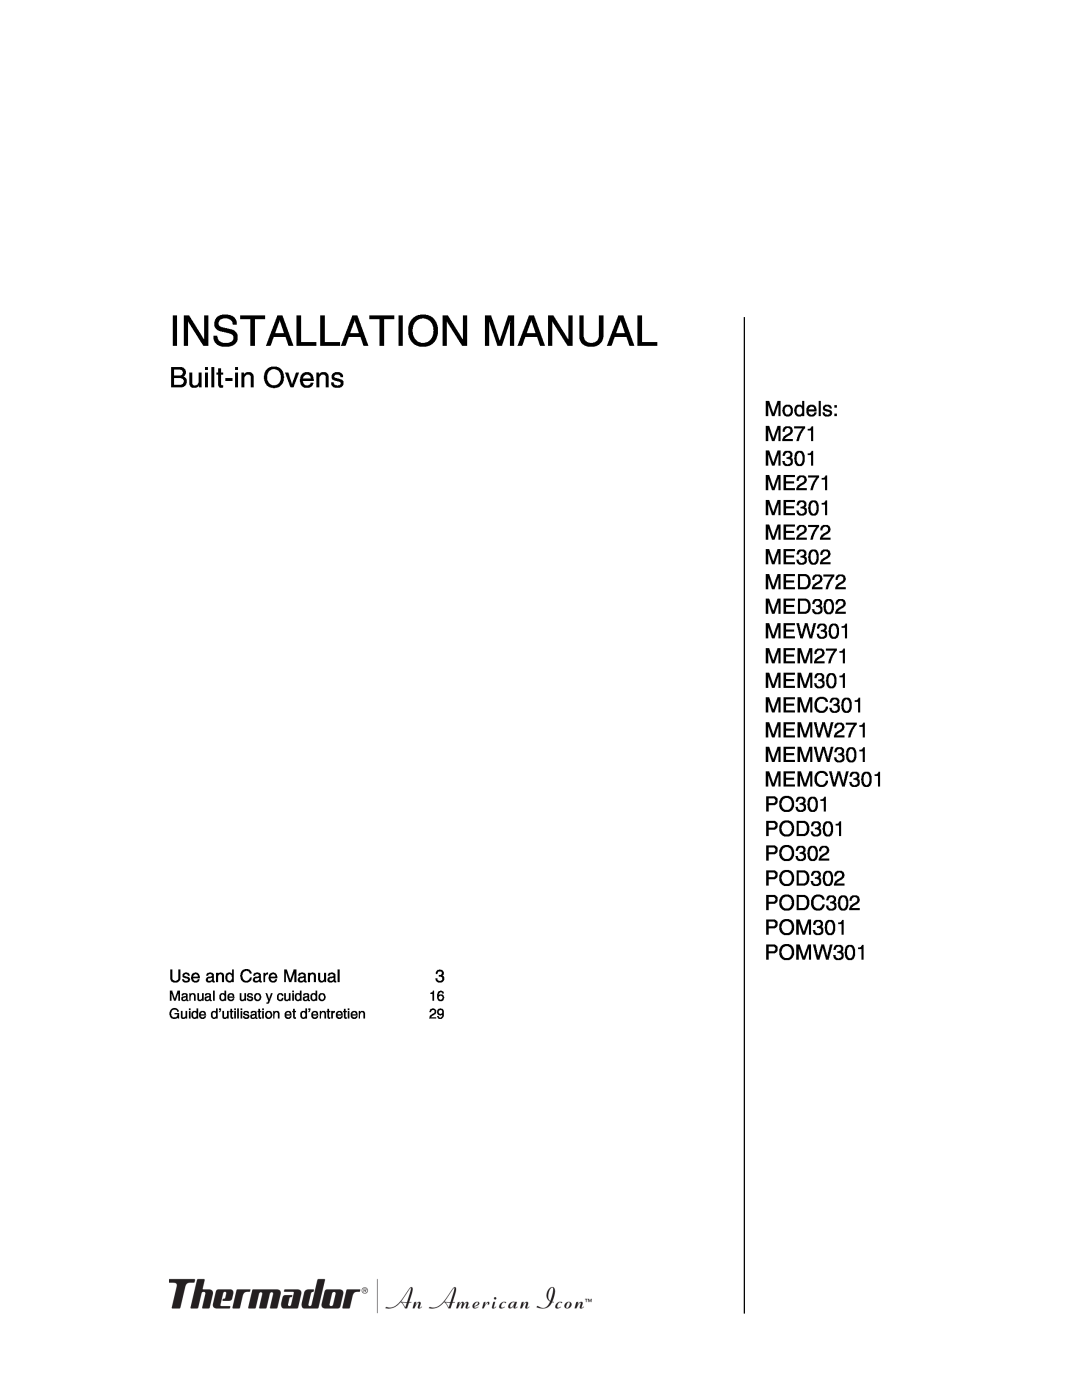 Thermador POD302 manual Use And Care Manual, Built-inOvens 